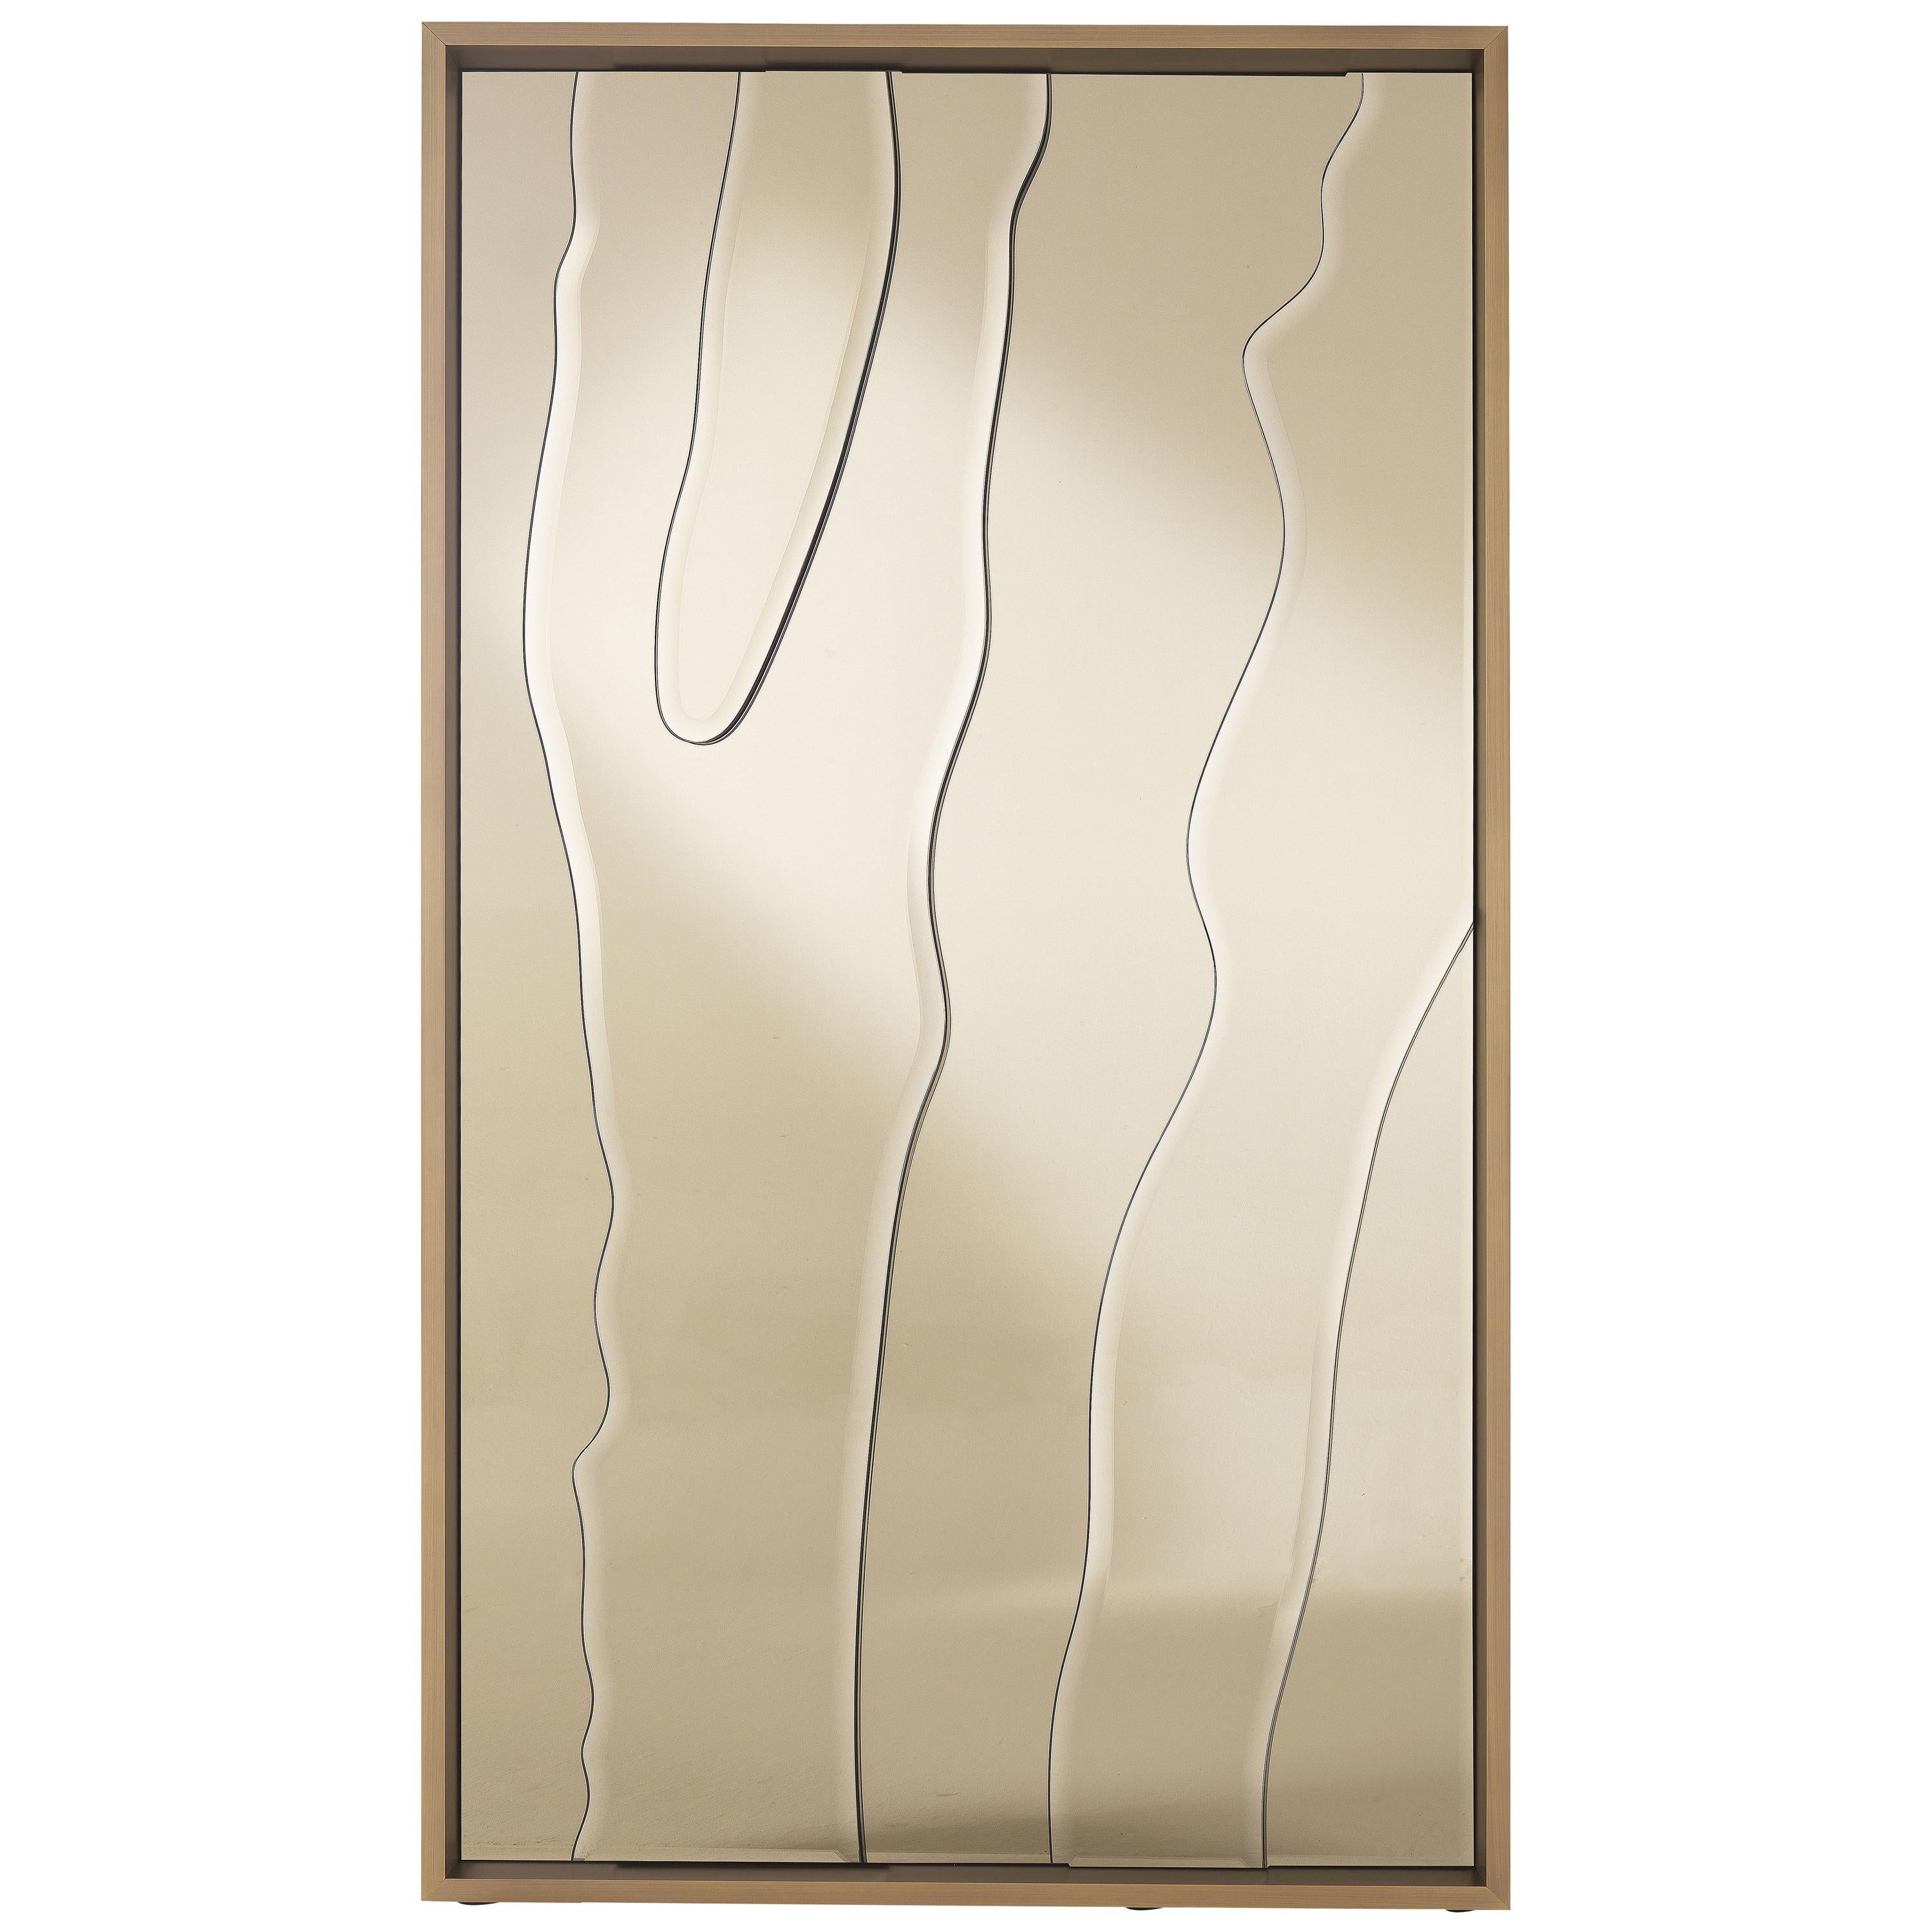 Sahara Small Stand Bronze Mirror by Roberto Cavalli Home Interiors